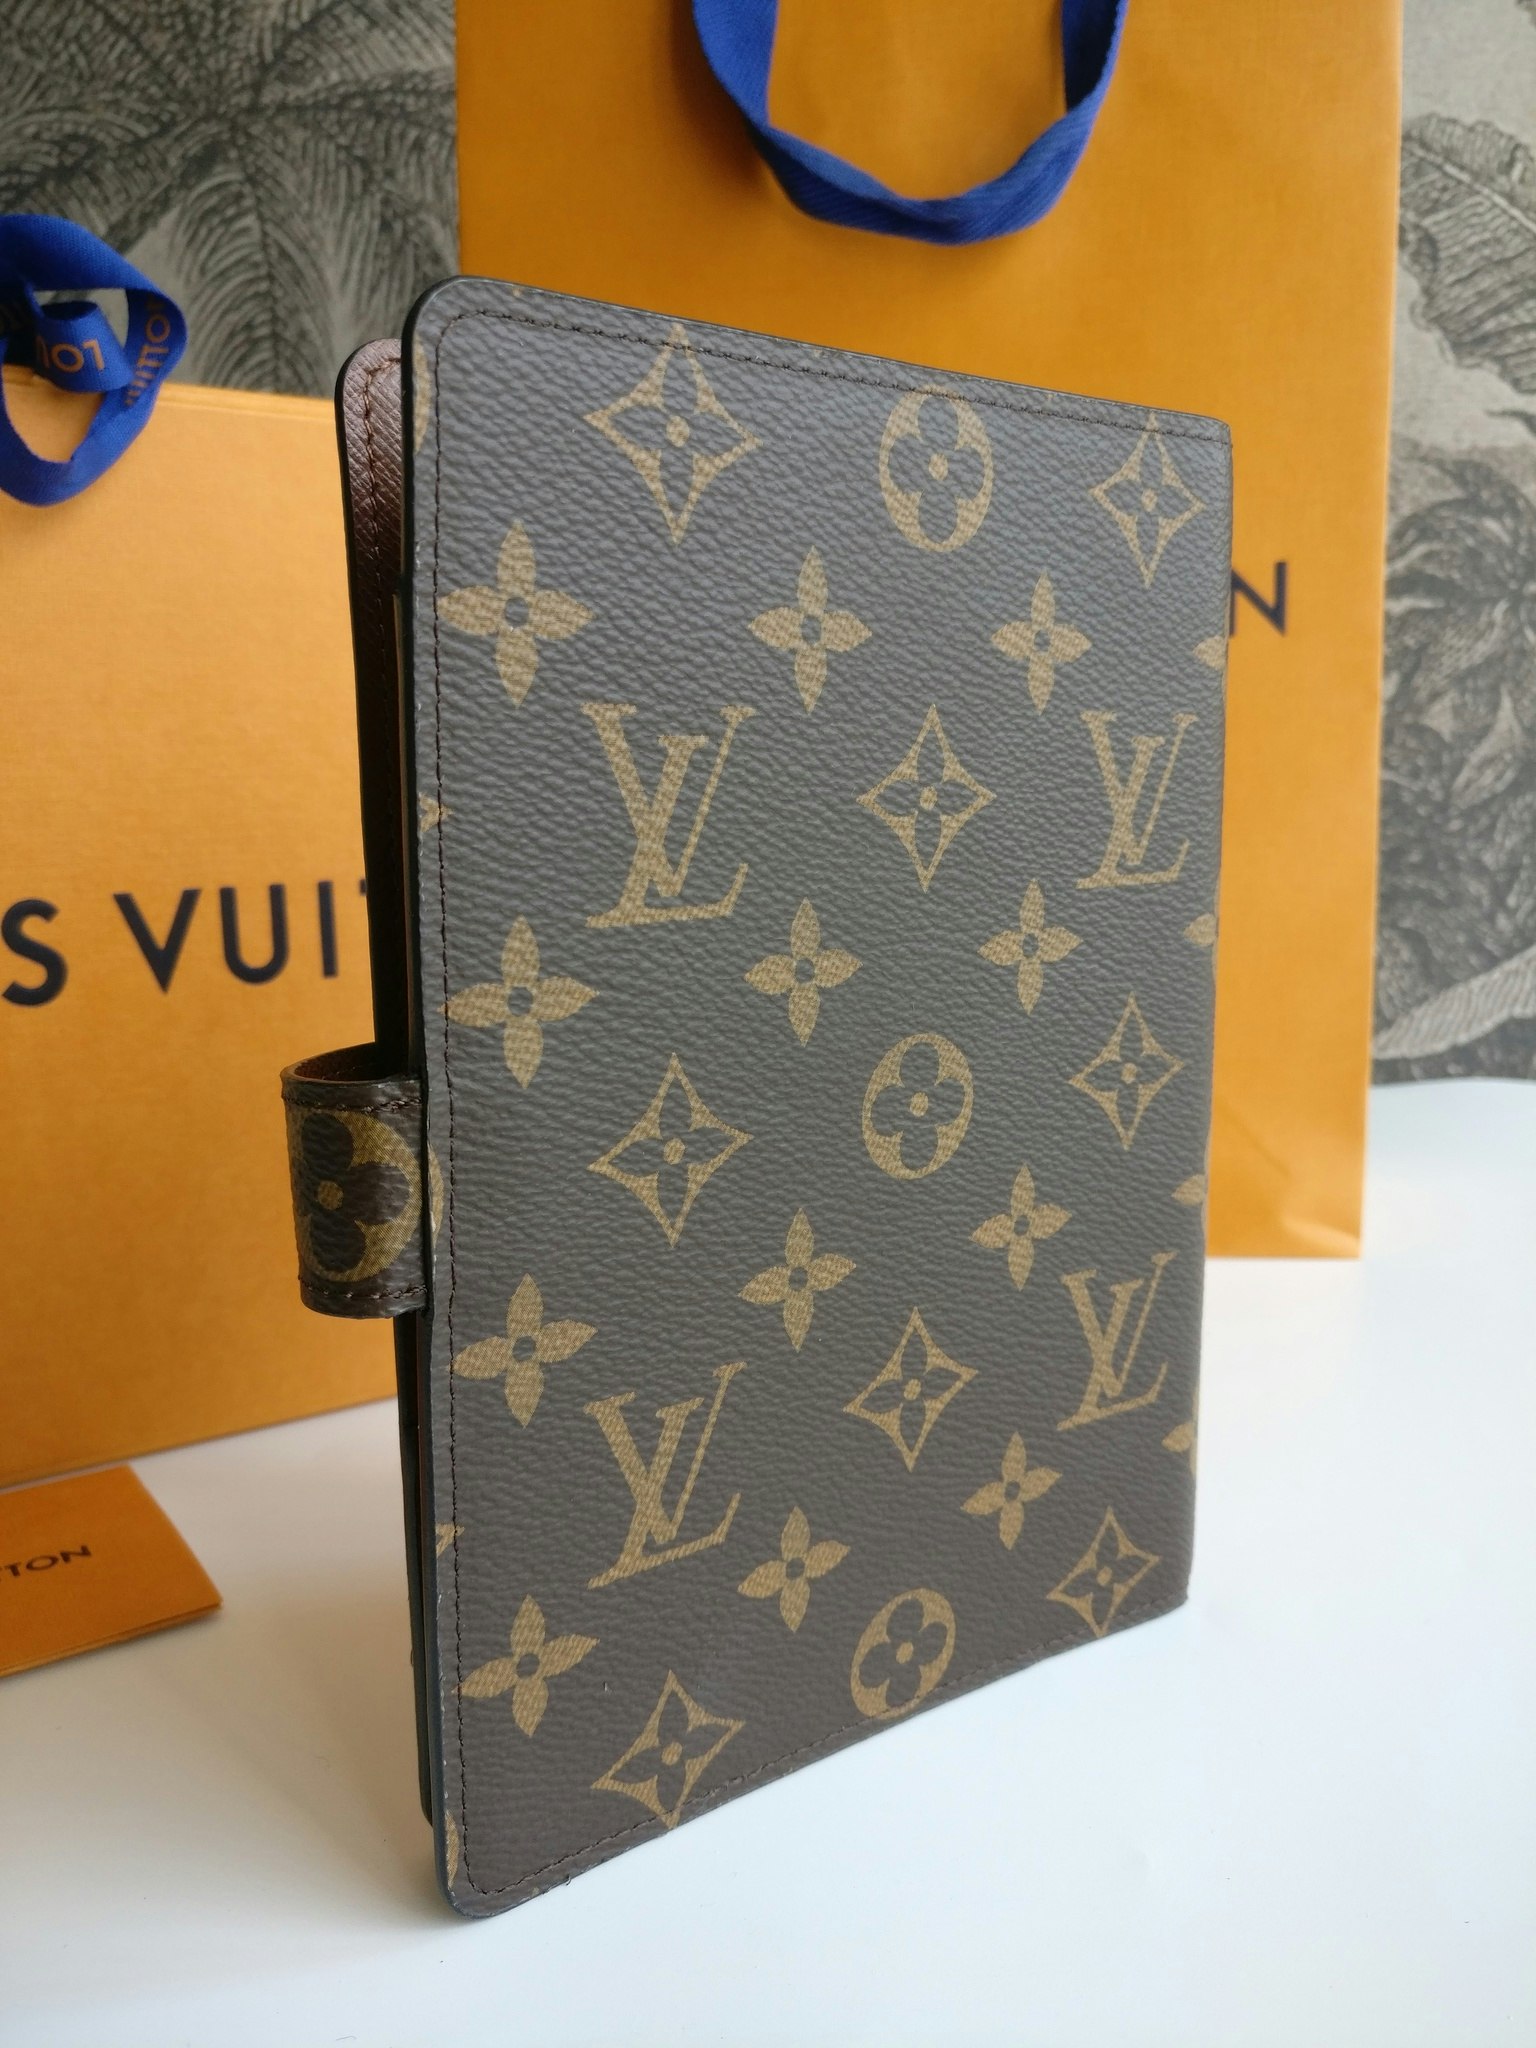 Shop Louis Vuitton Medium Ring Agenda Cover (R20242, R20240, R20105) by  nordsud